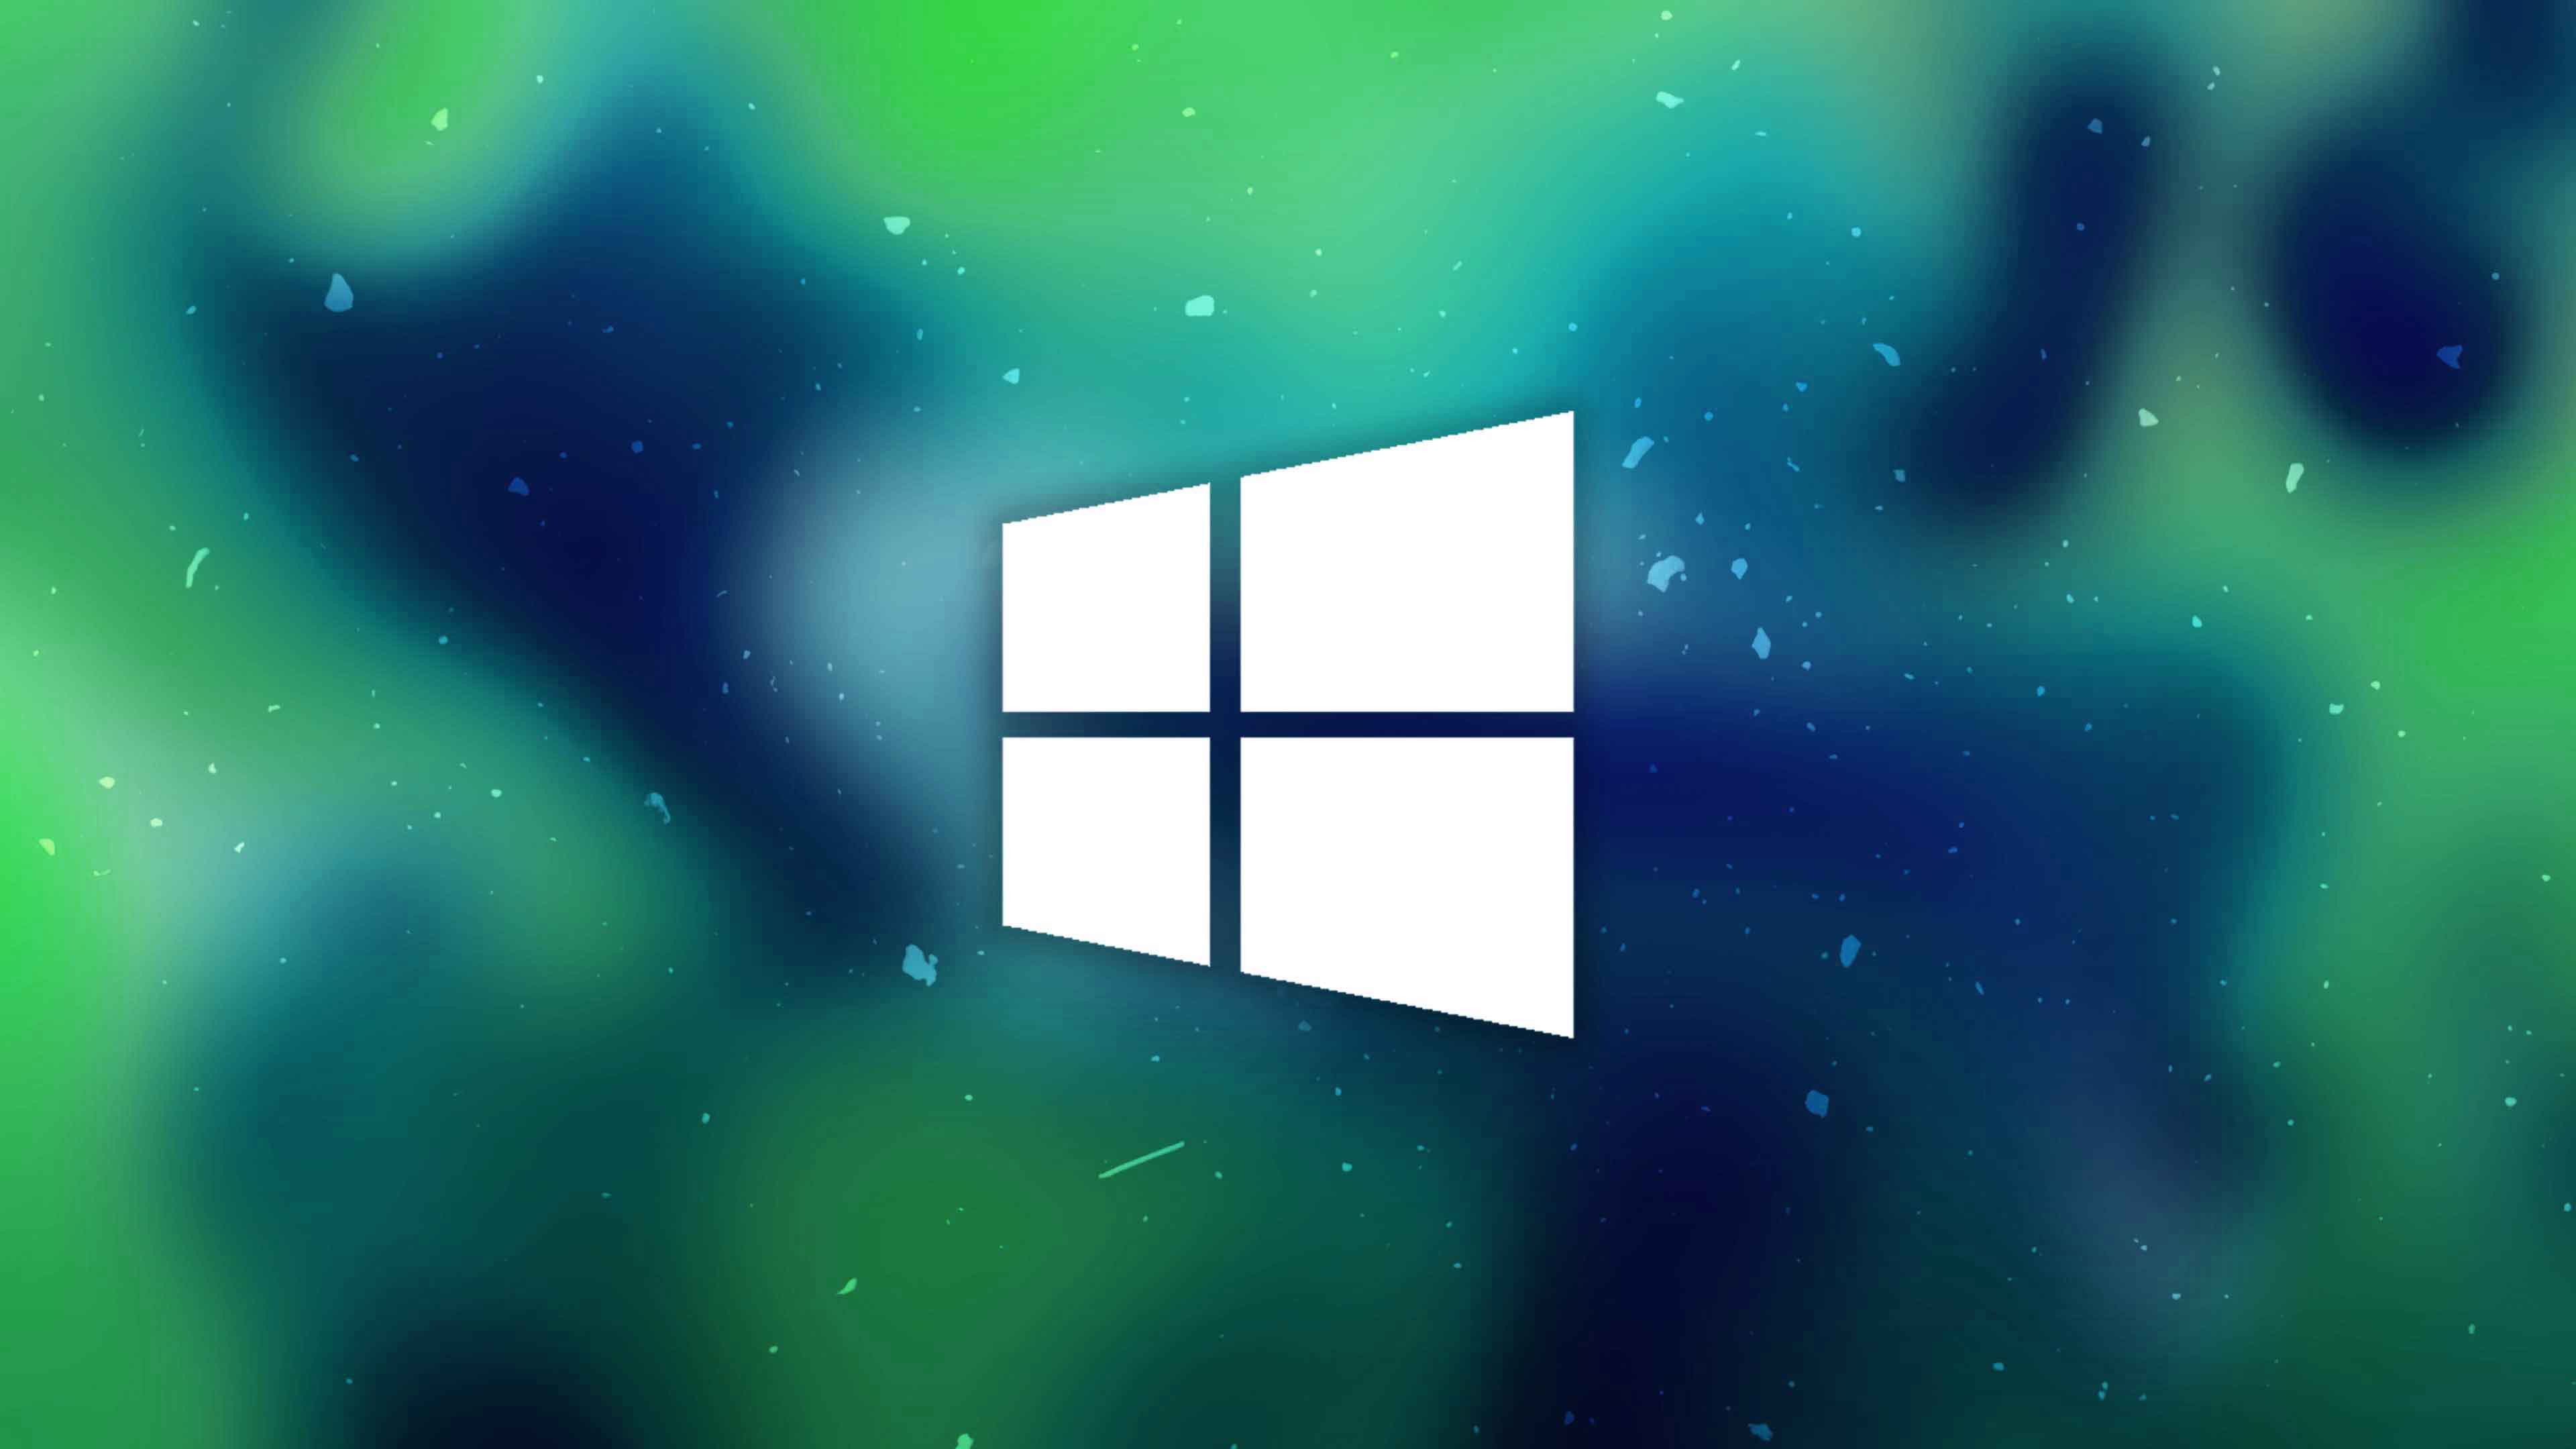 Download Windows 10 wallpapers in 2021 ...10hub